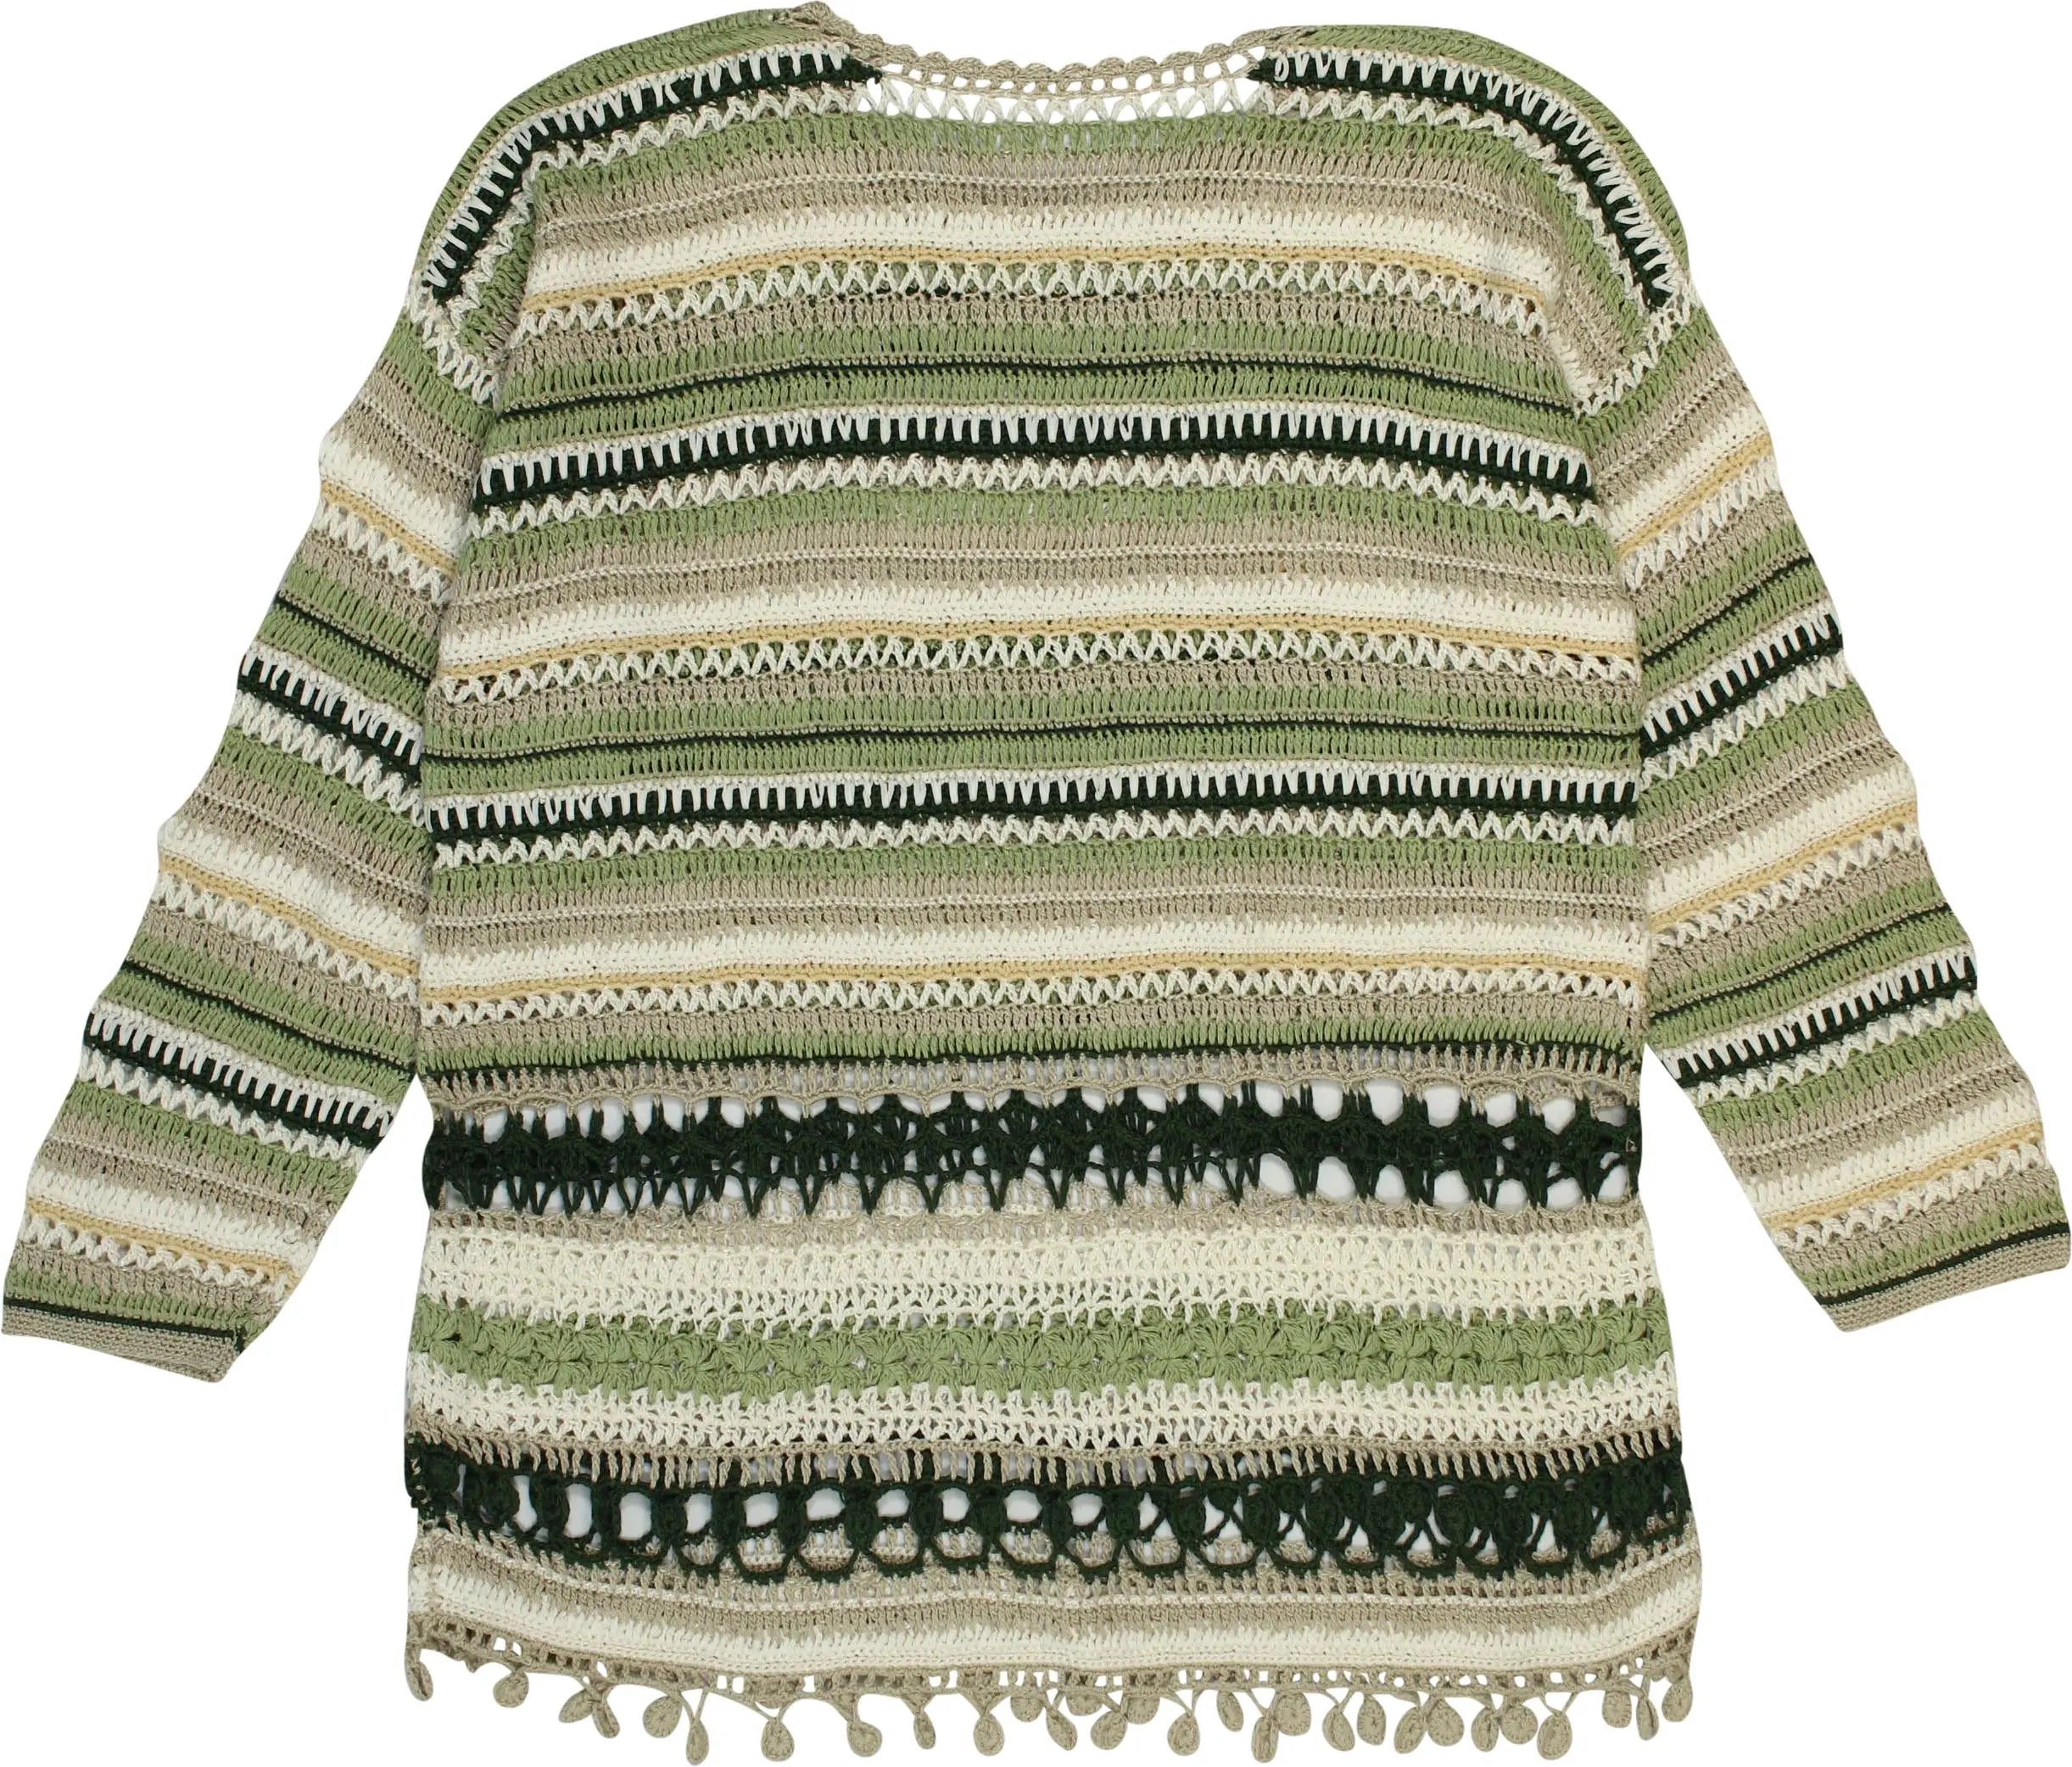 Handmade - Crochet Jumper- ThriftTale.com - Vintage and second handclothing